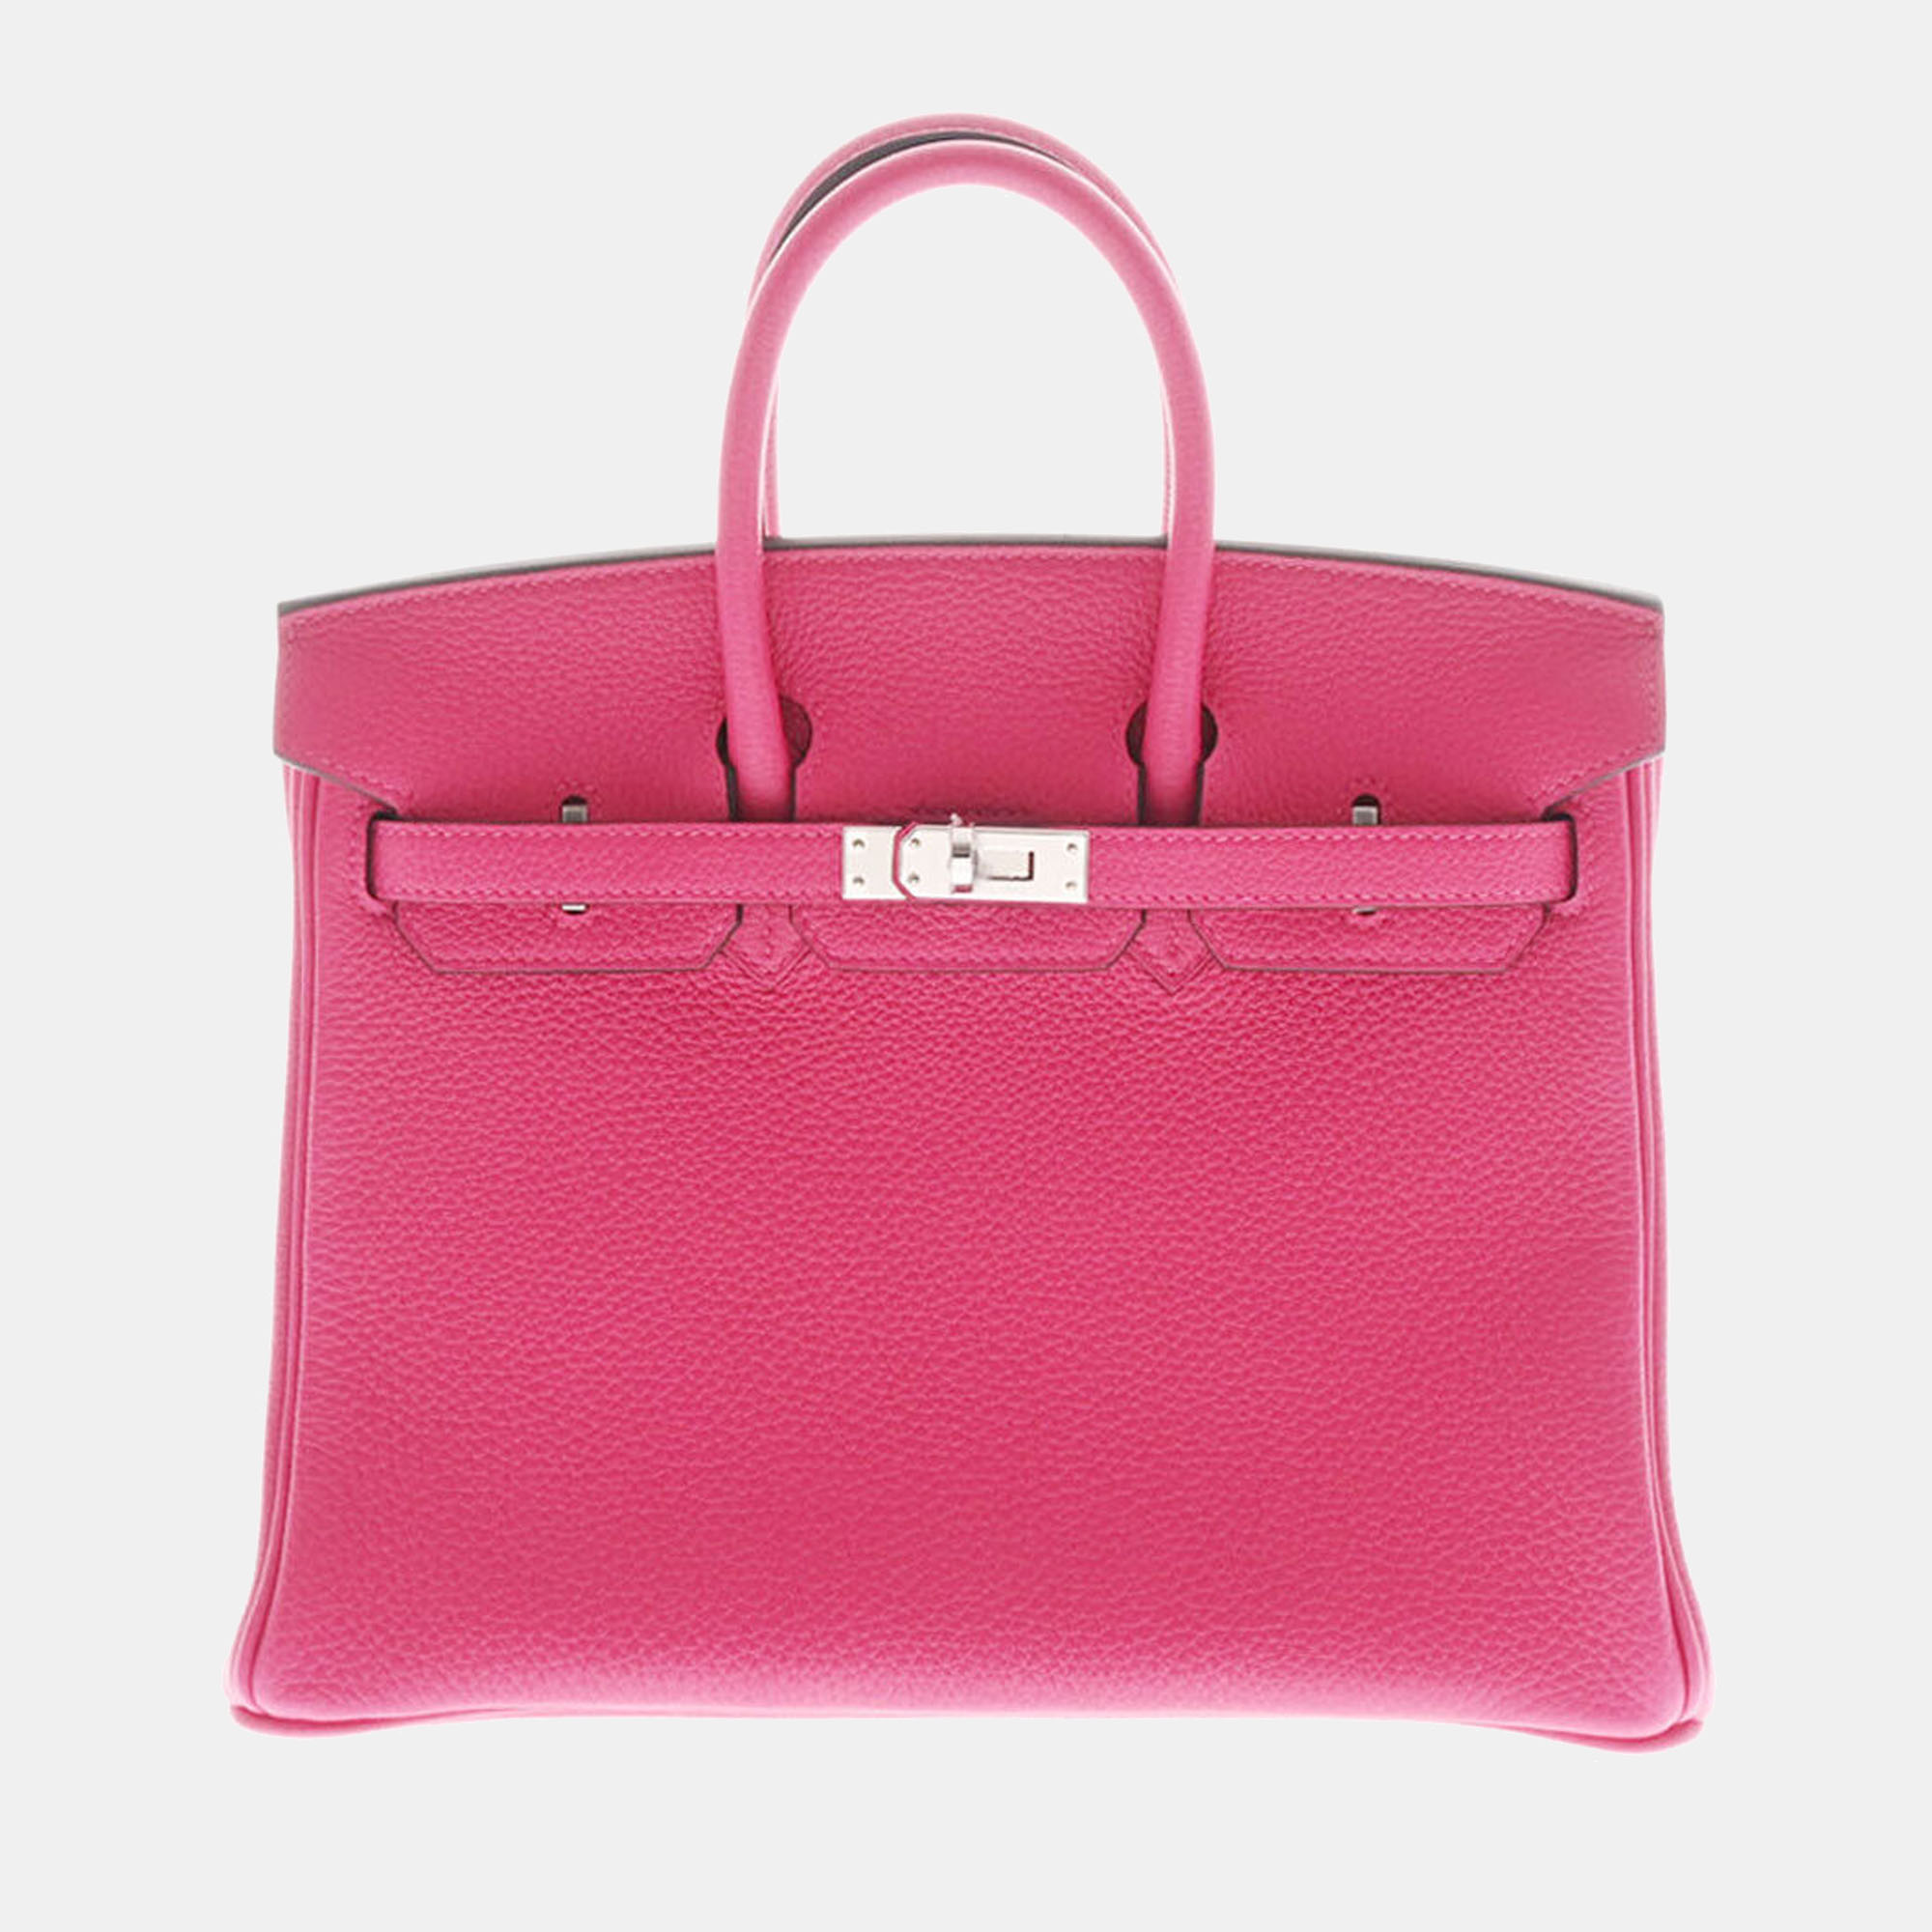 Hermes Pink Togo Leather Palladium Hardware Birkin 25 Bag